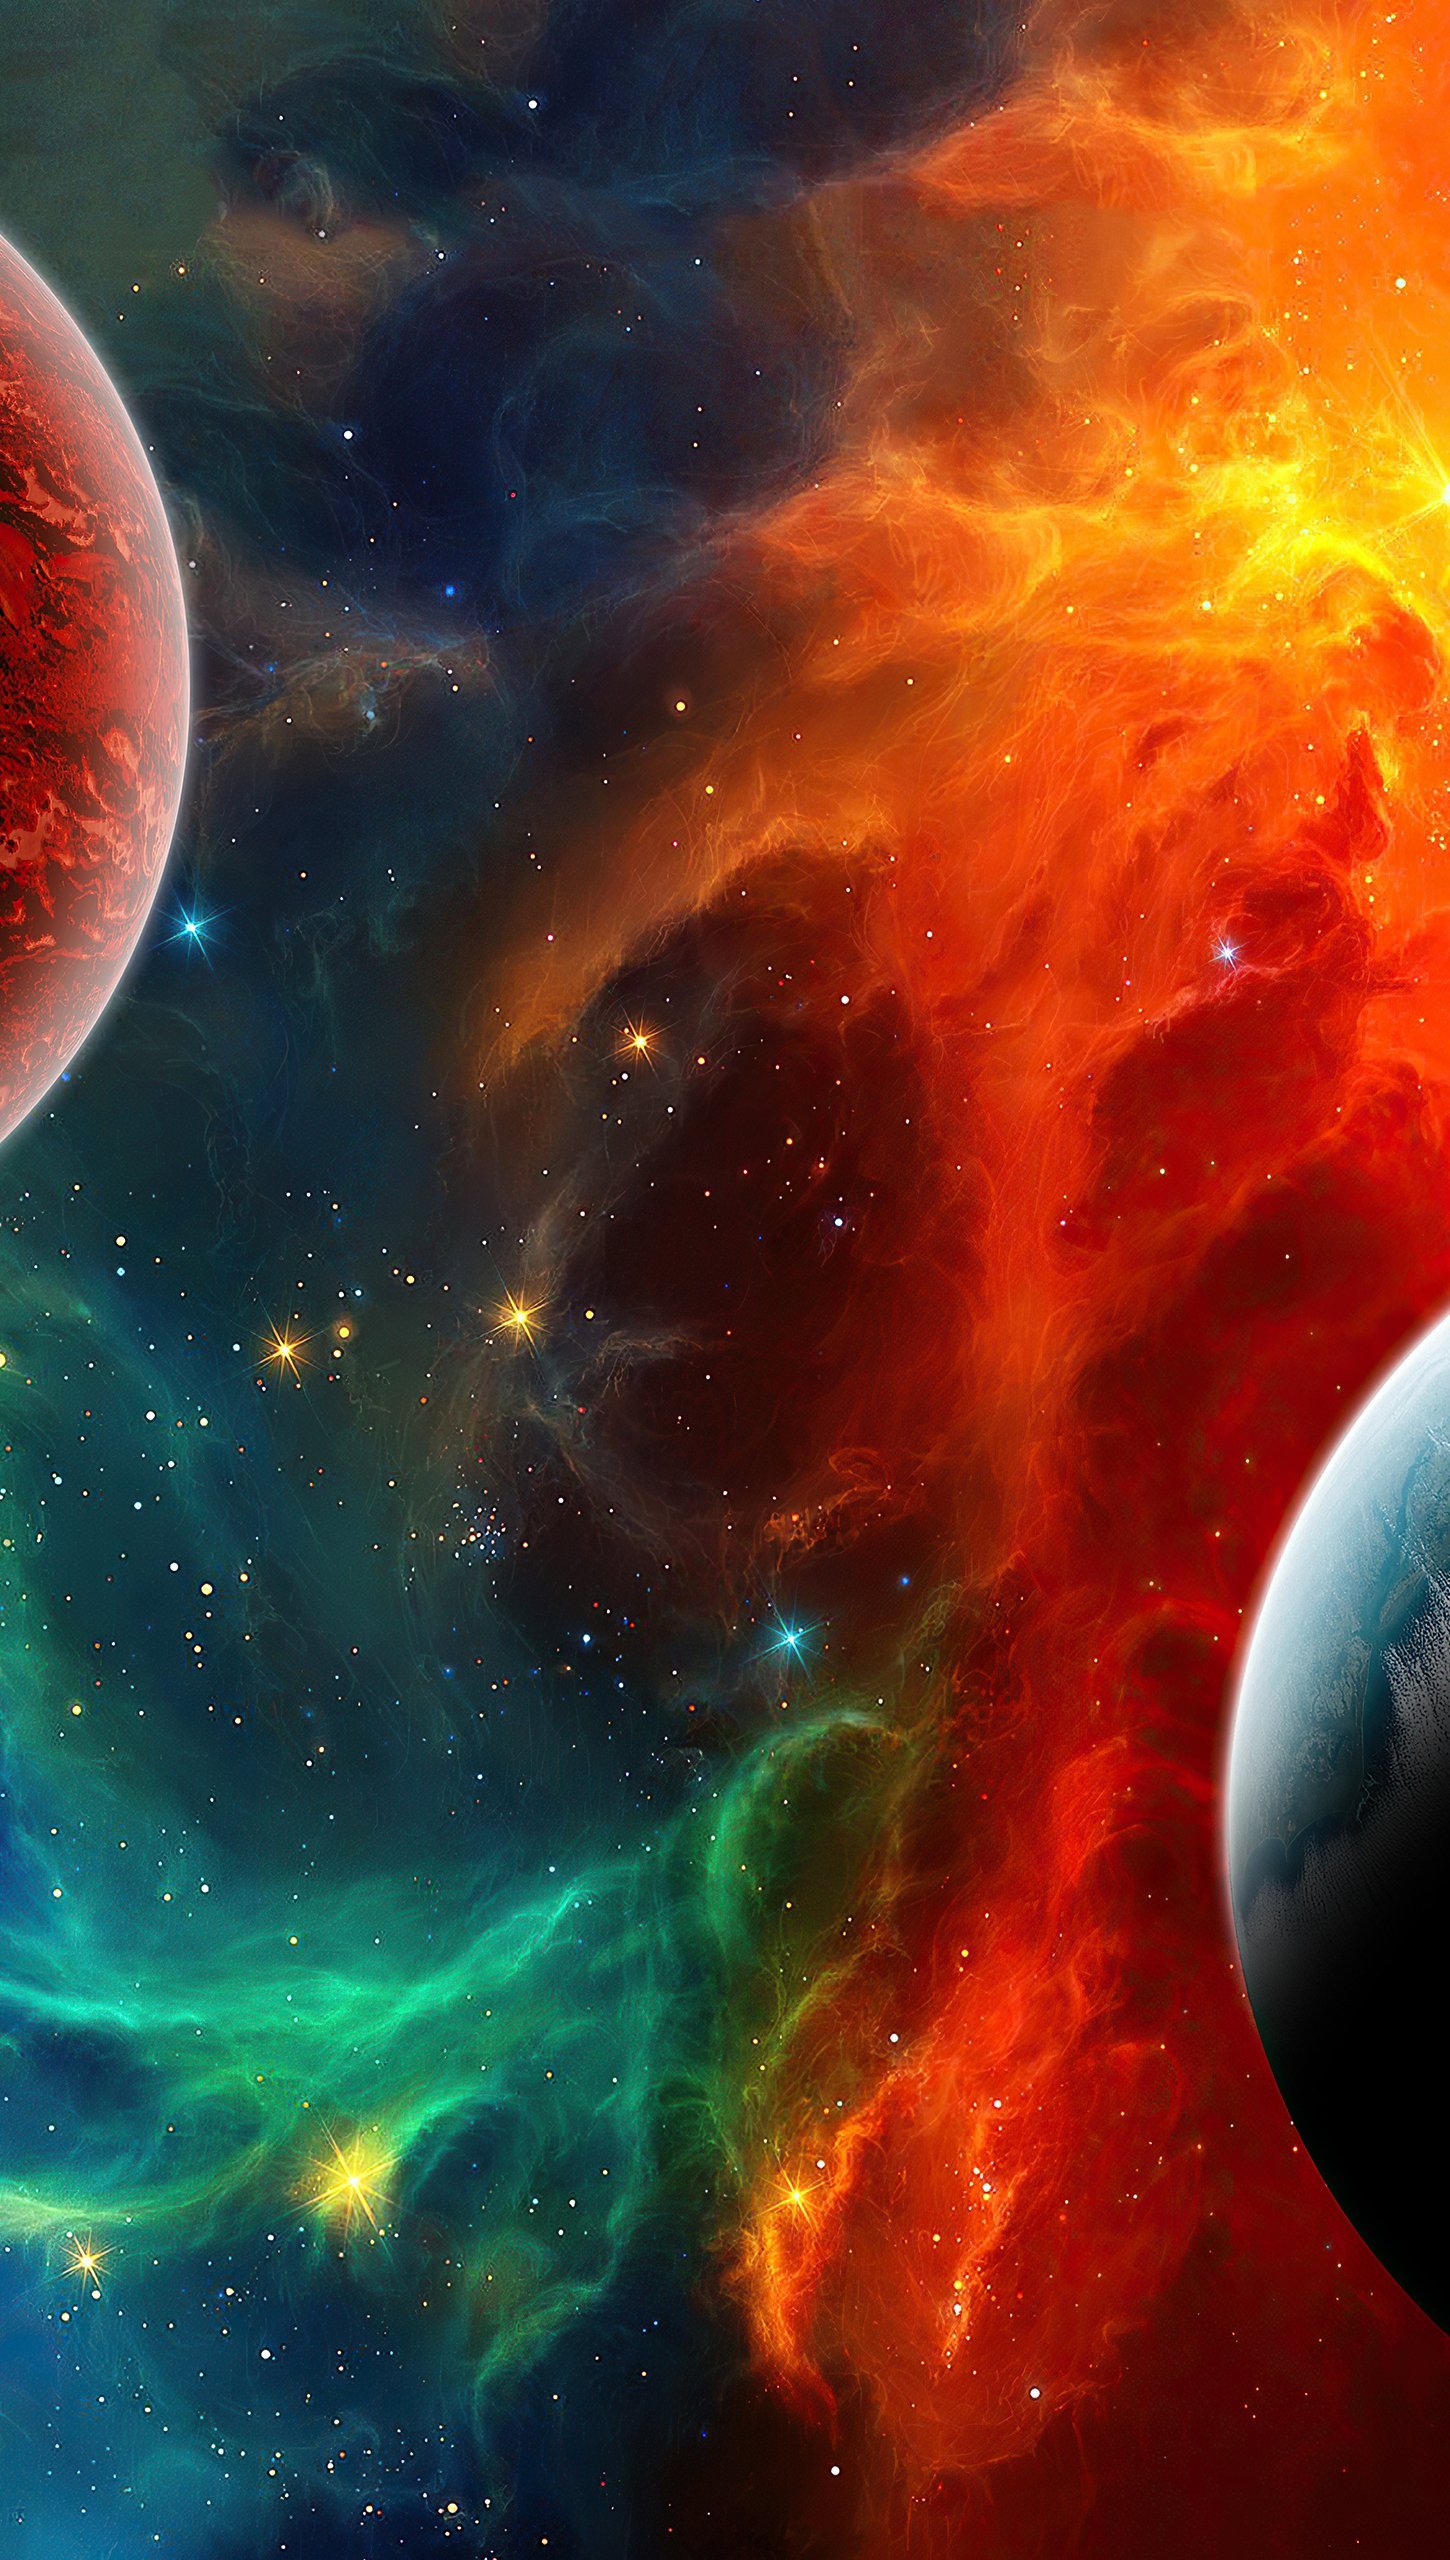 Colorful Nebula in space Wallpaper 4k Ultra HD ID:5829